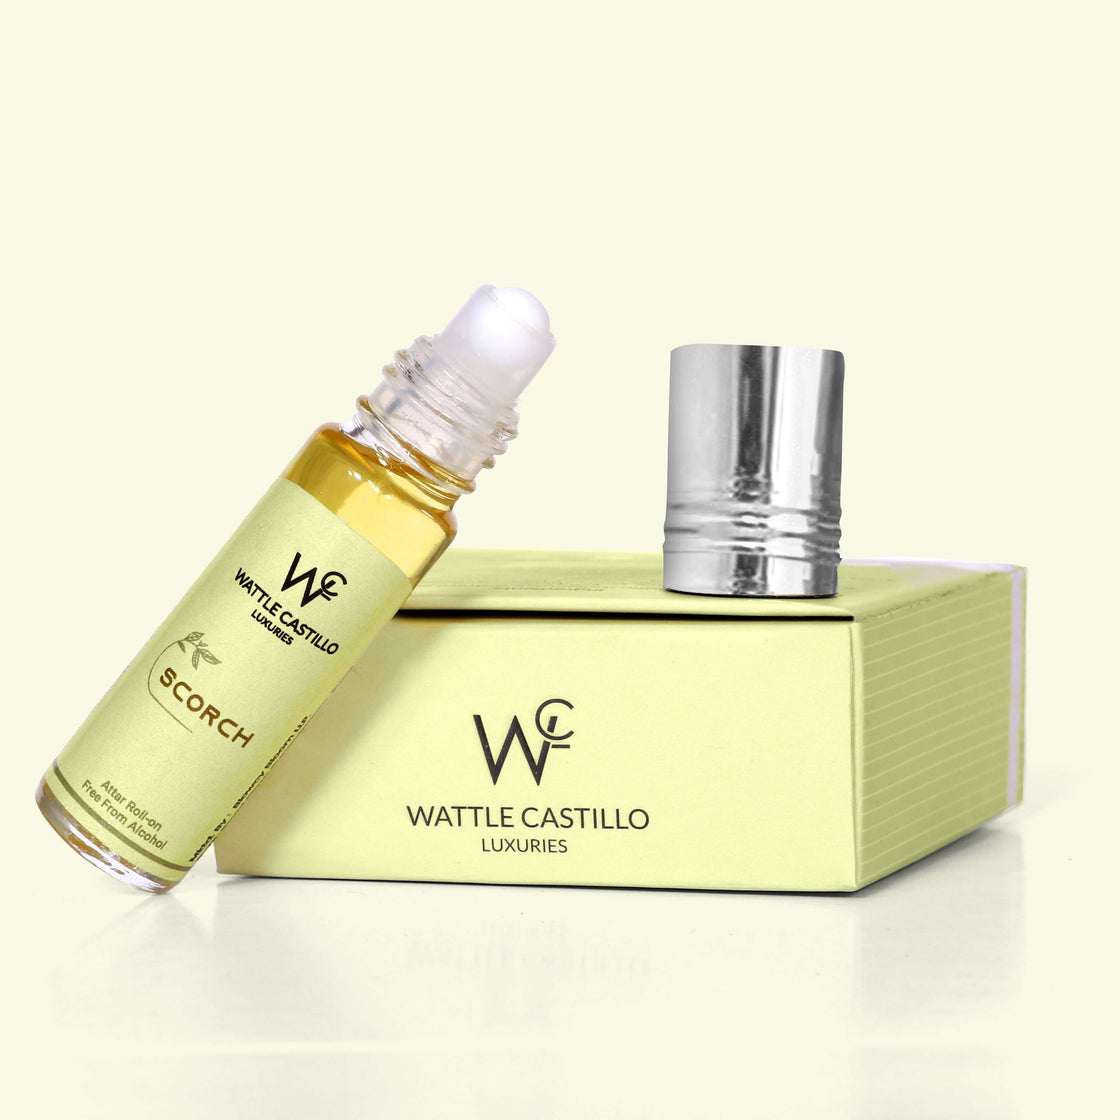 Wattle Castillo Scorch And Oud Premium Luxury 100% Non Alcoholic Long Lasting Roll On Attar Combo Perfume For Unisex - Wattle Castillo